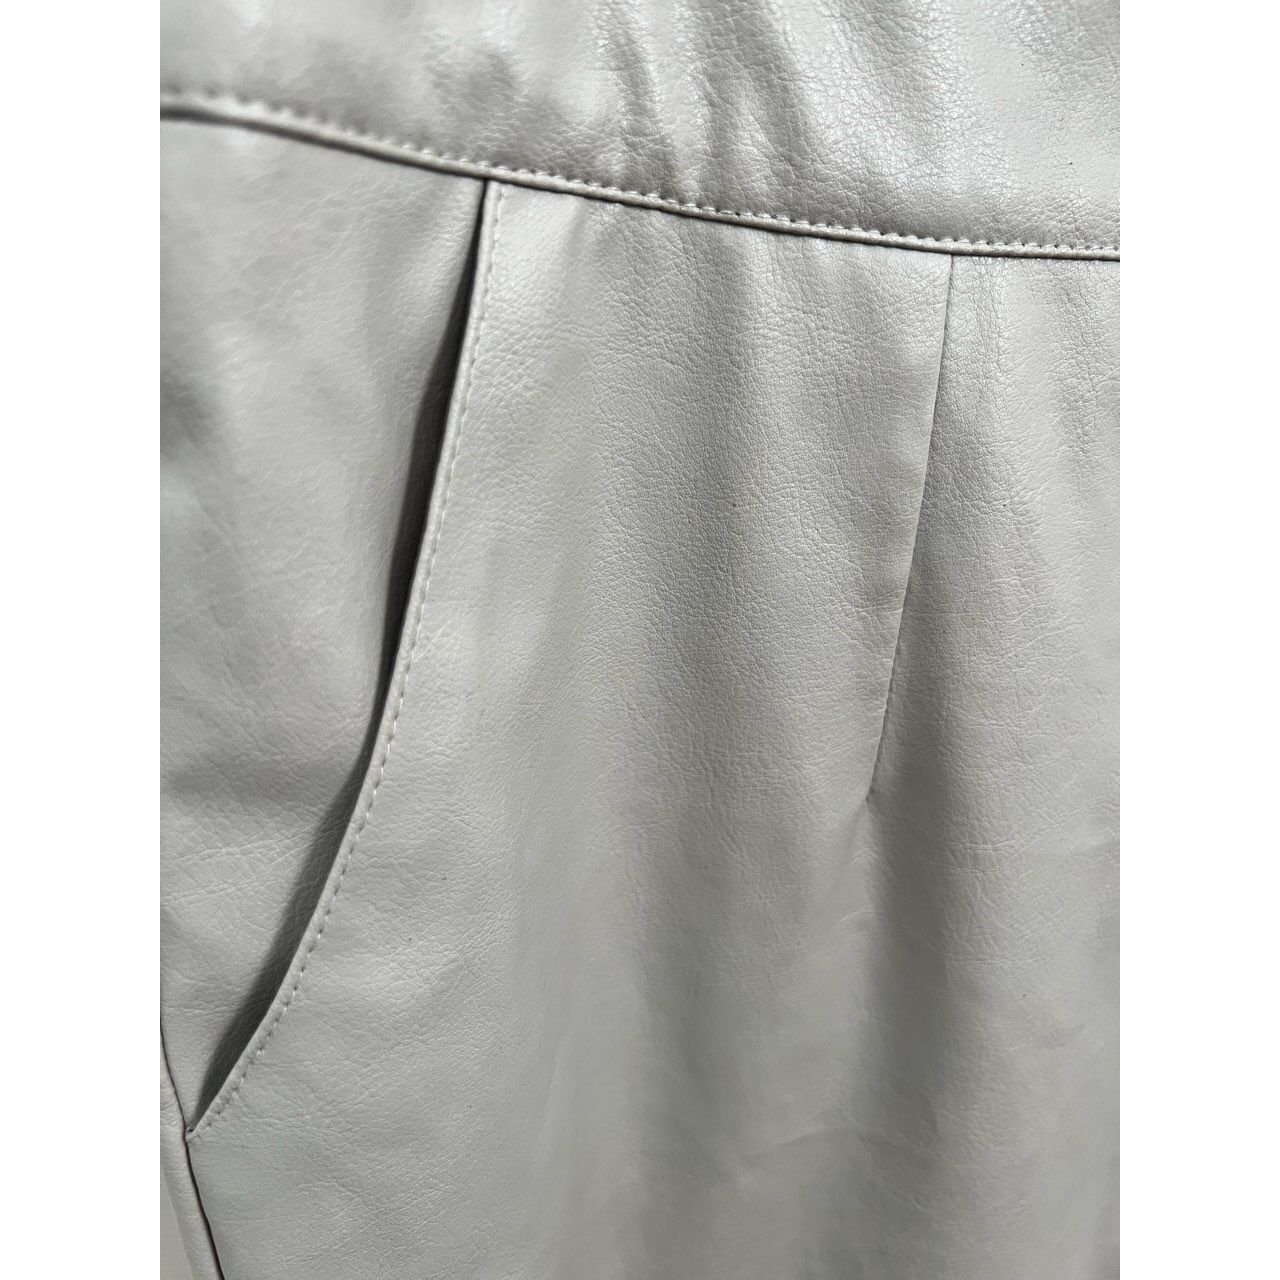 River Island Beige Leather Midi Skirt